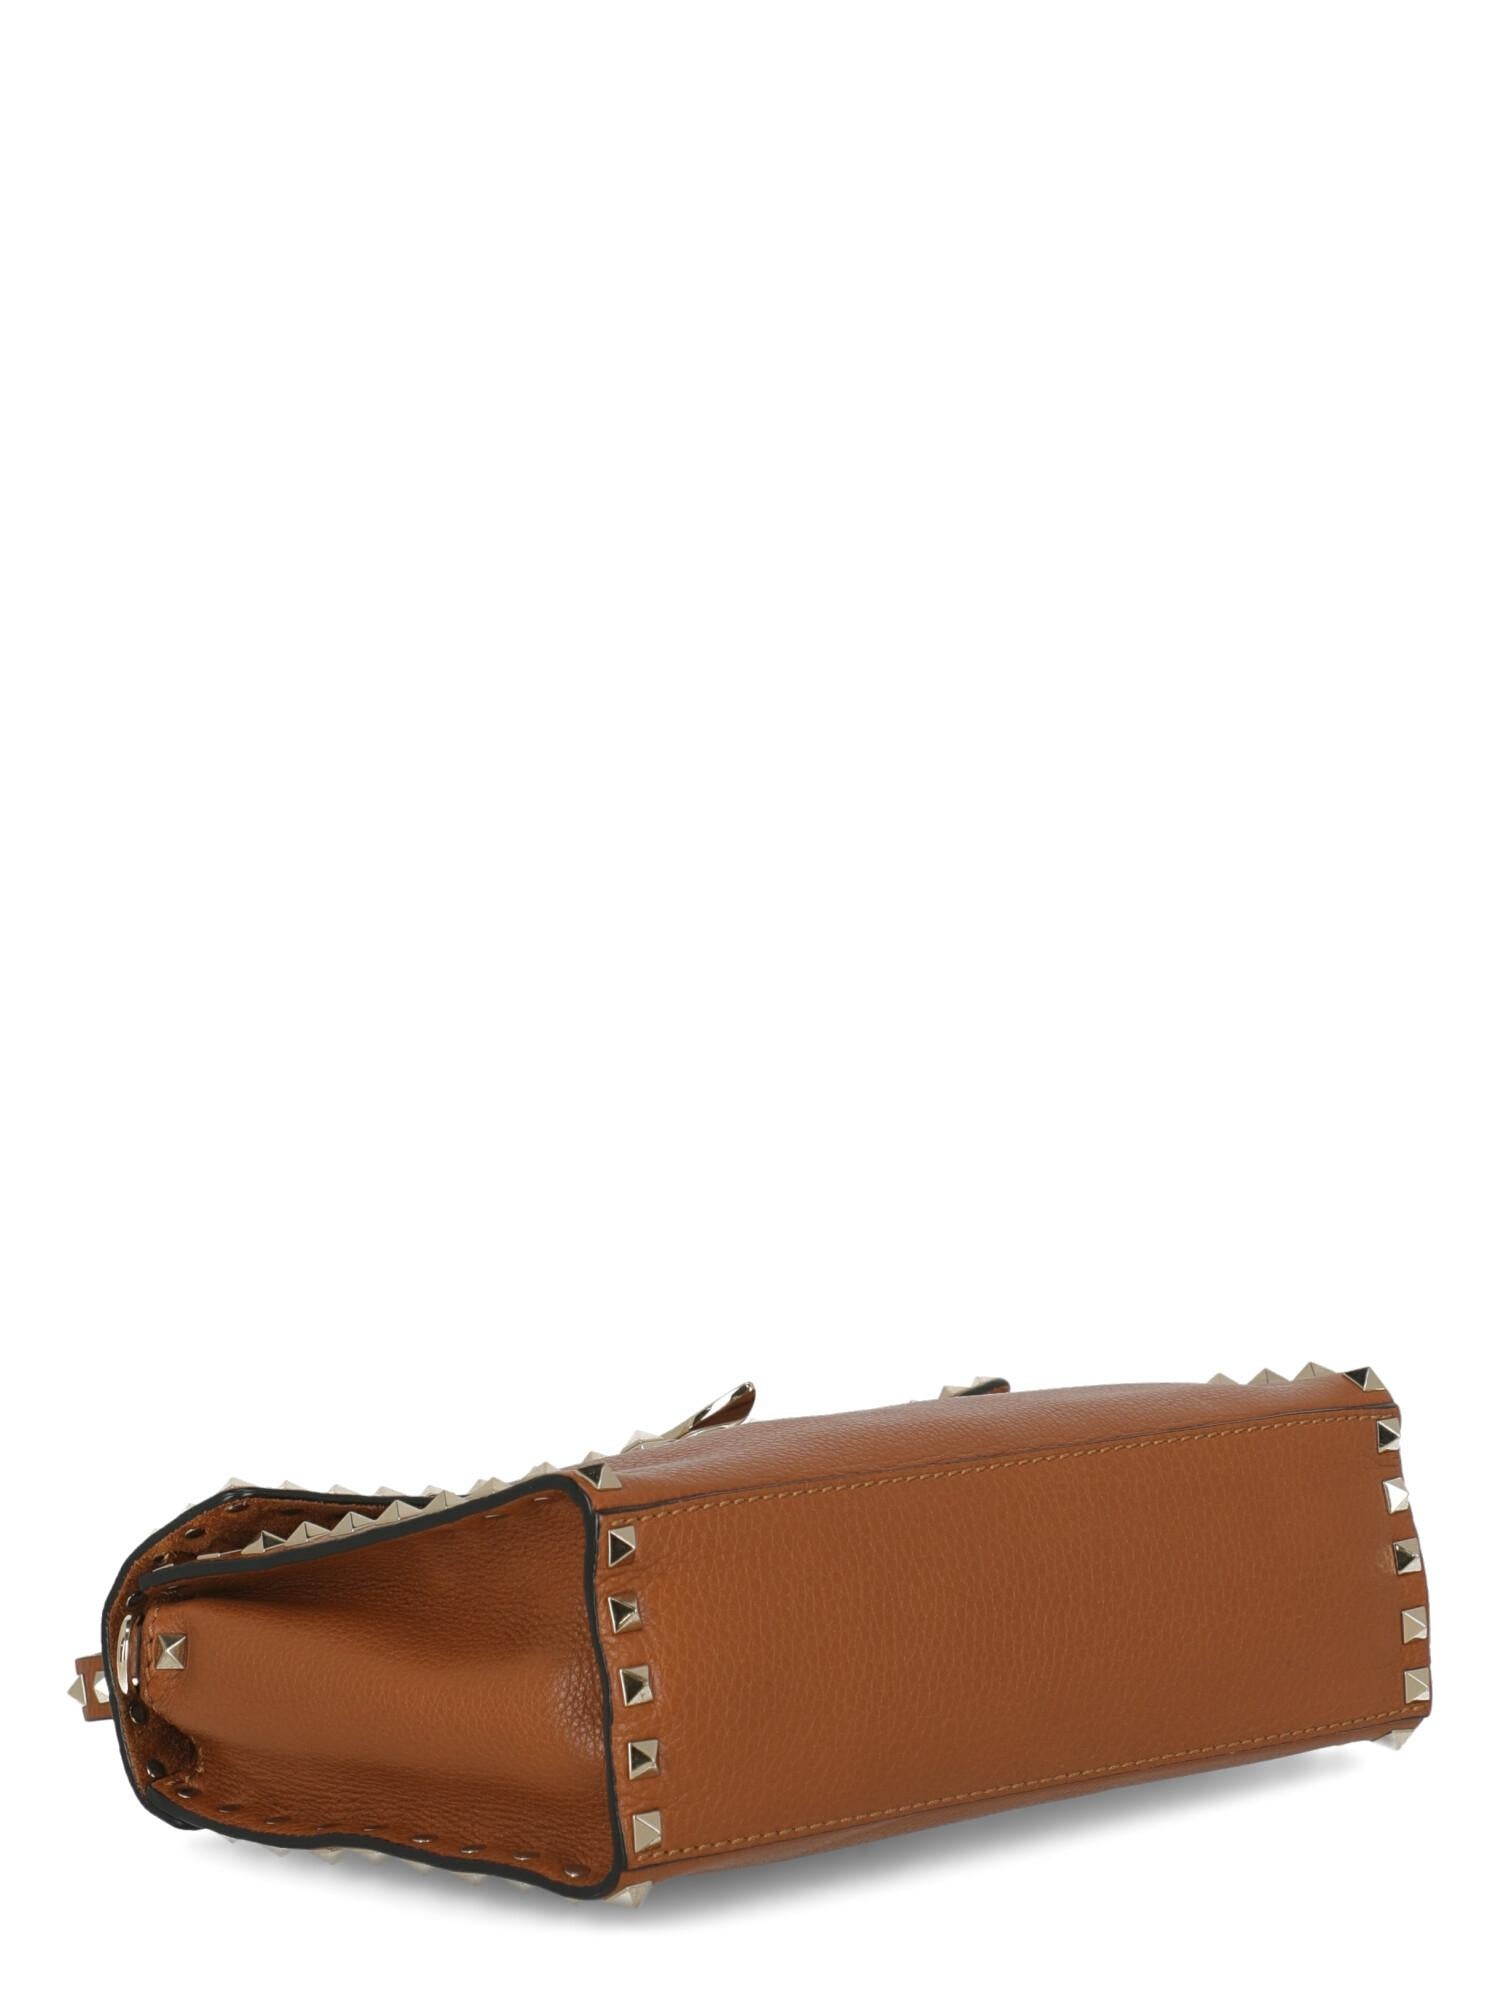 Valentino Woman Handbag Brown Leather 1